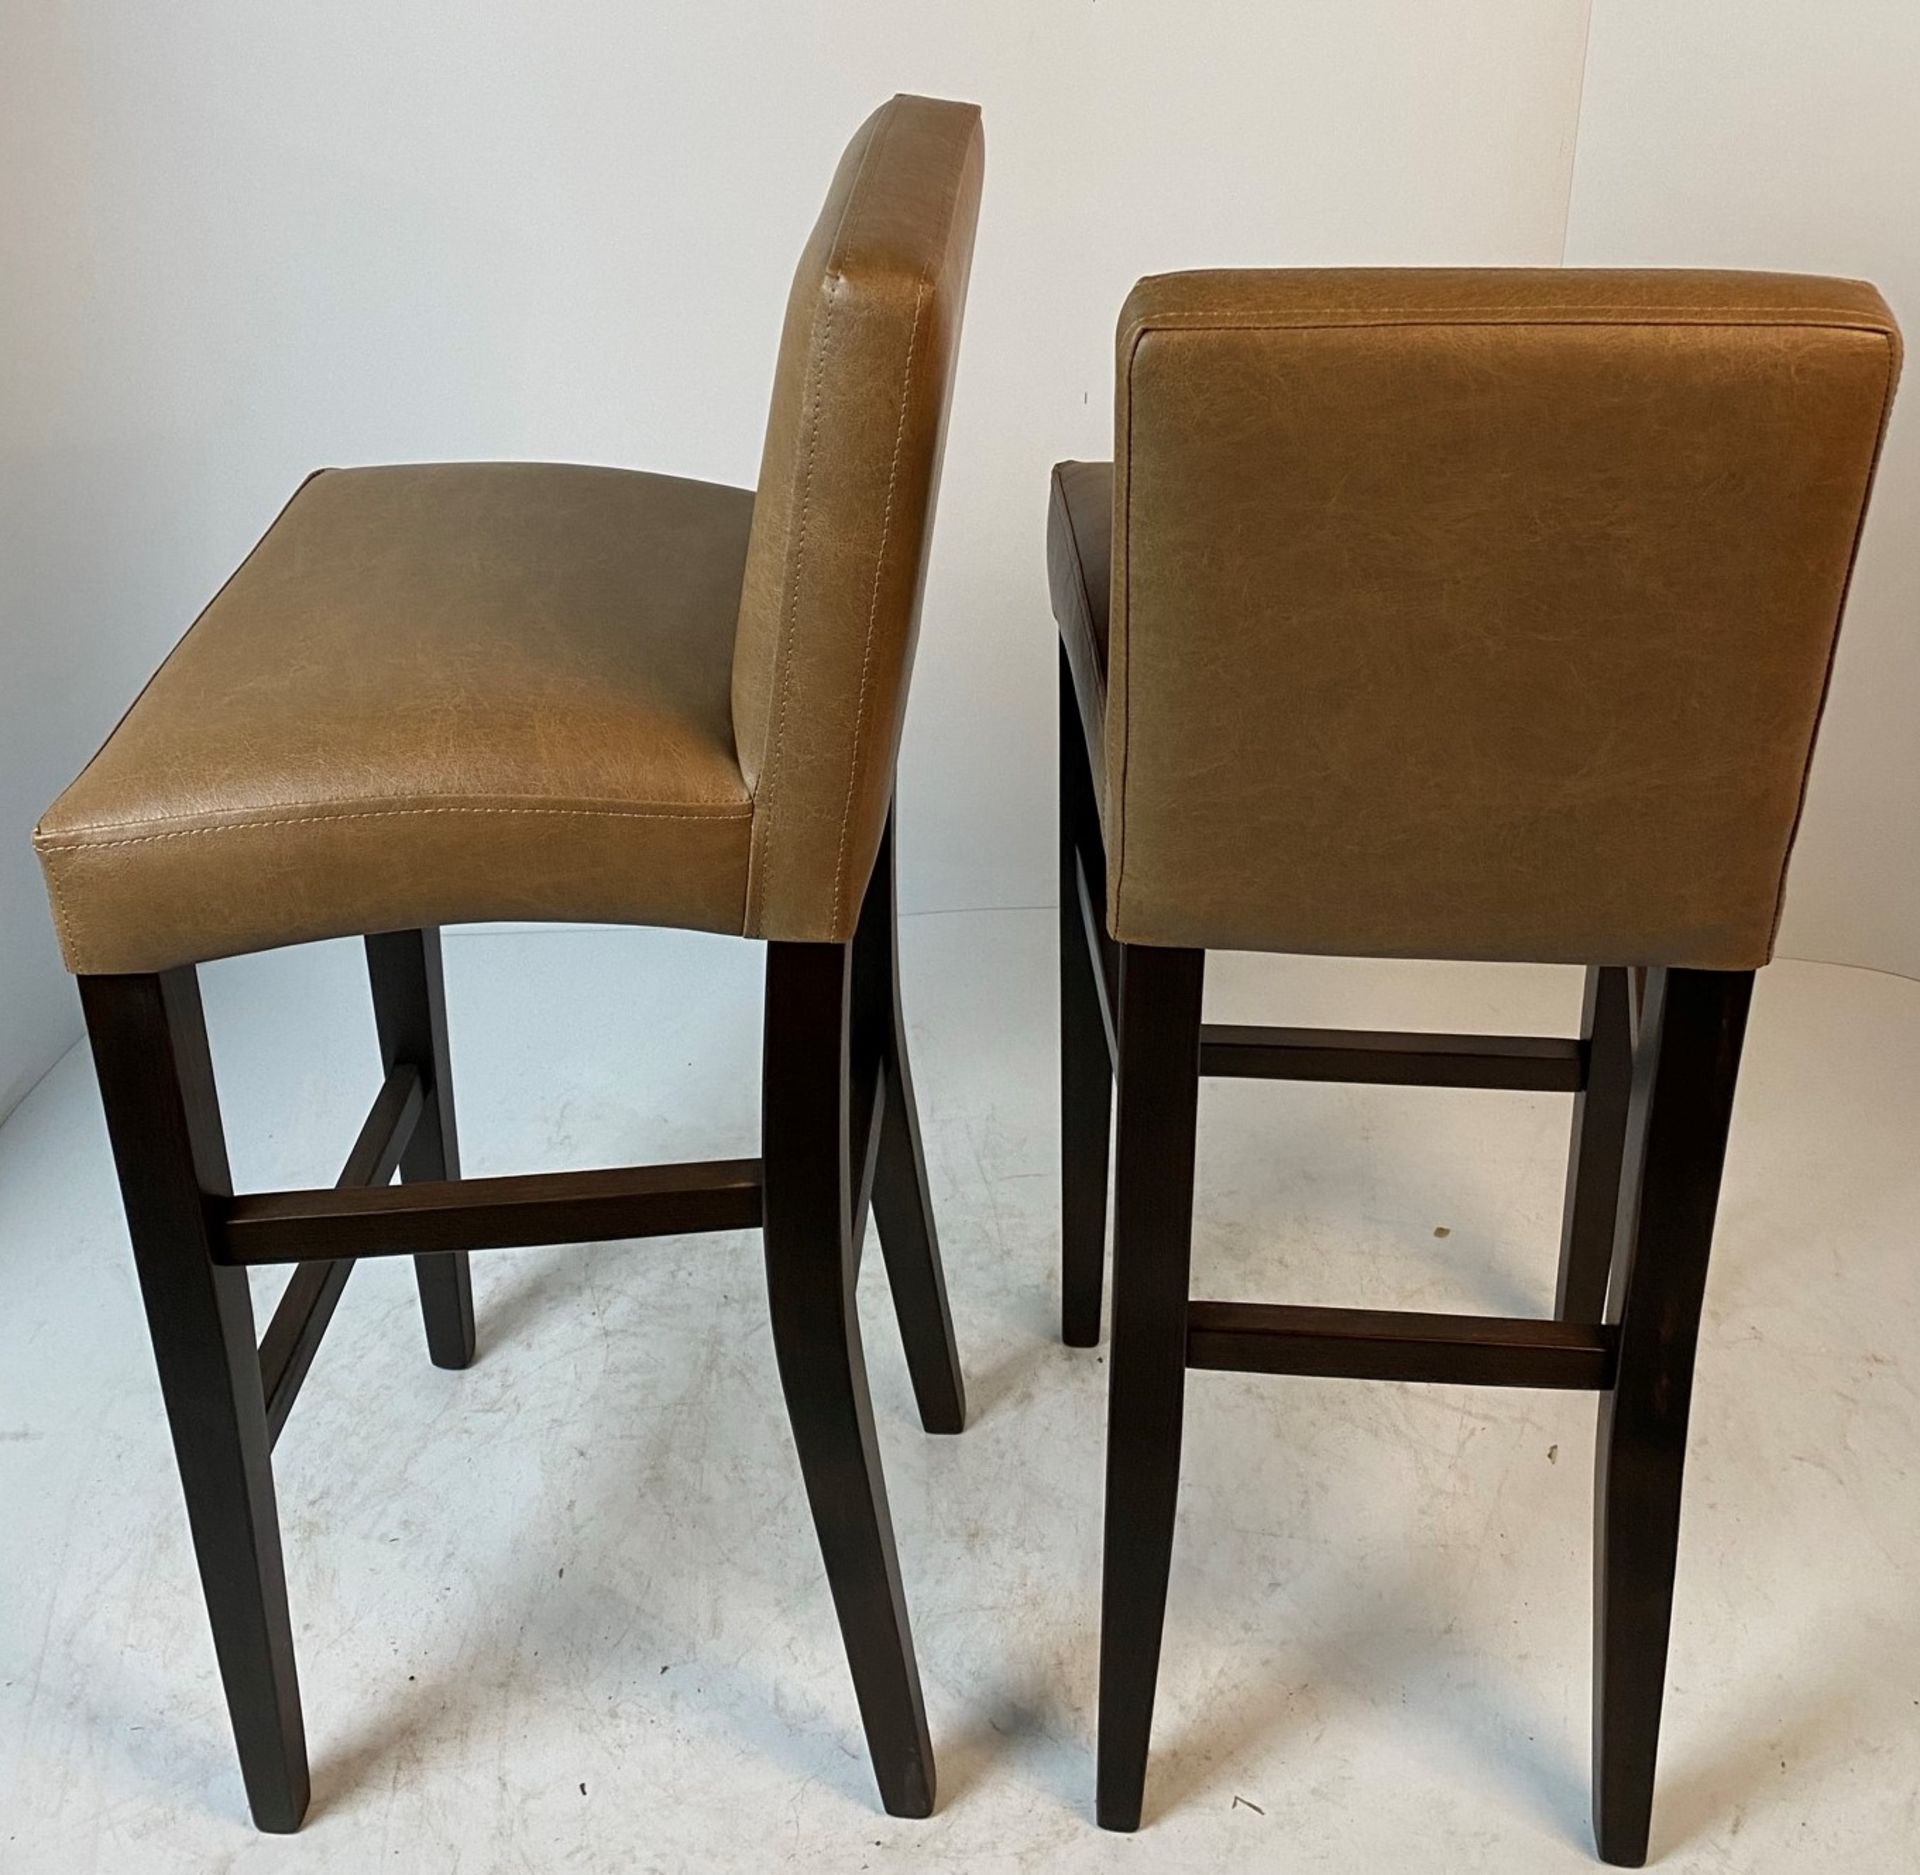 2 x Mini Valencia ILIV Saddle Toffee high stools with dark walnut coloured frames - Image 2 of 3